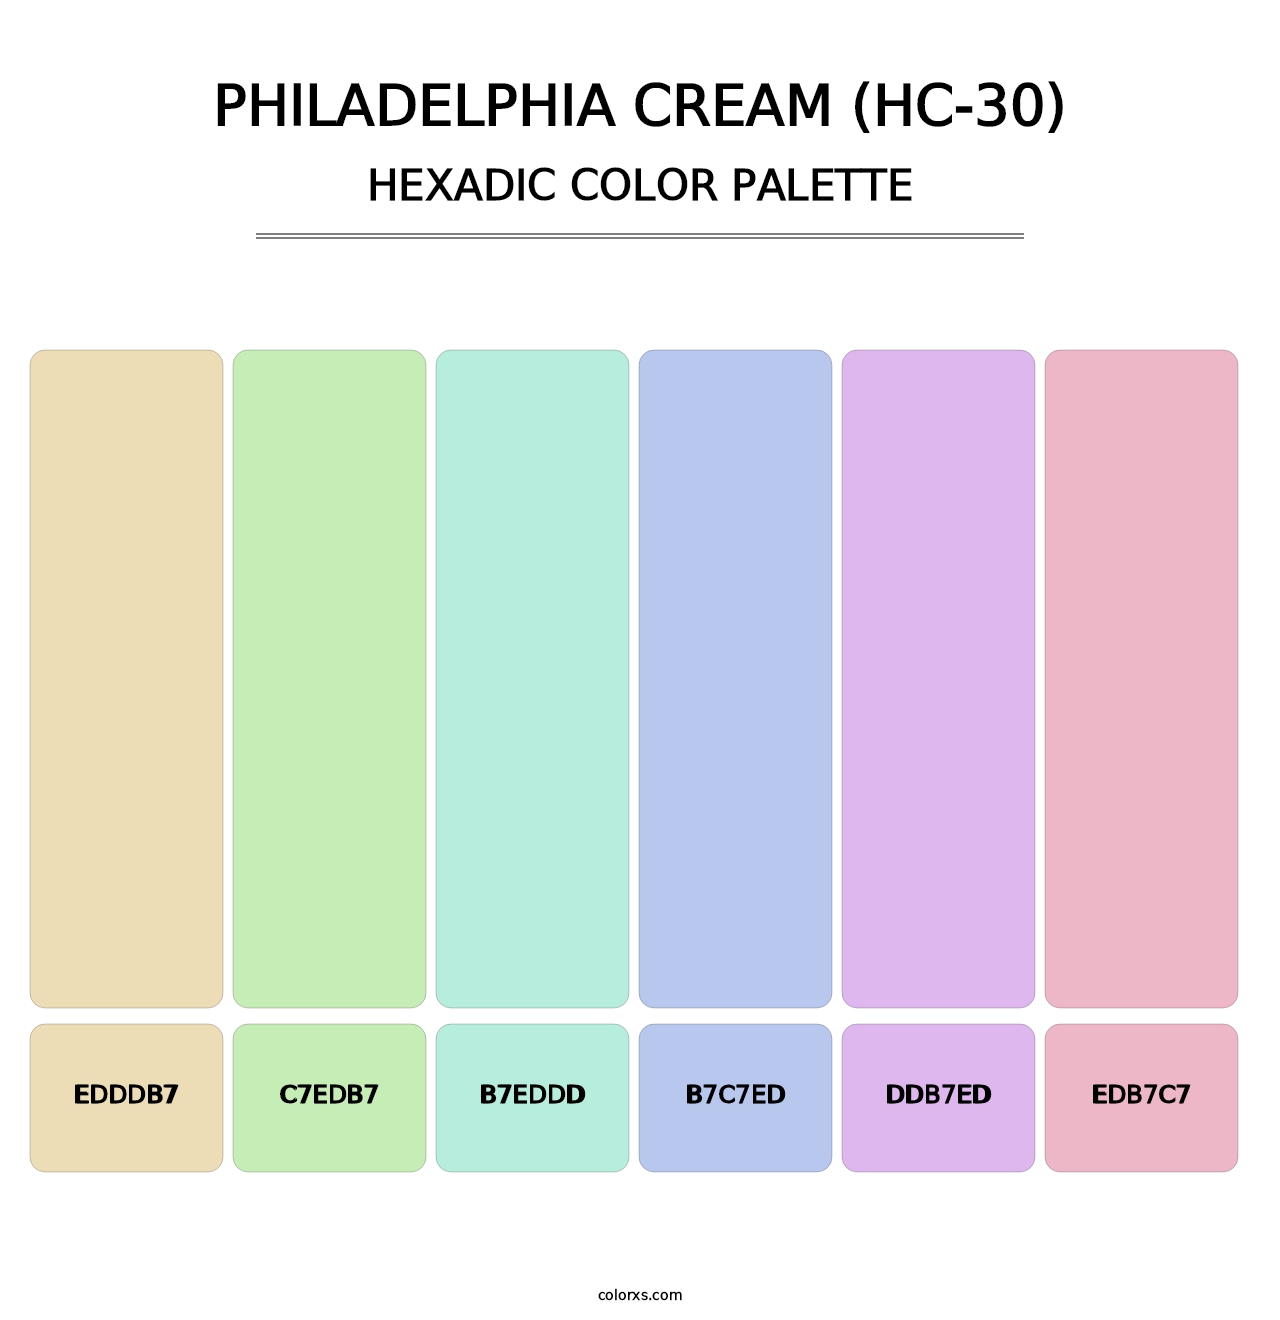 Philadelphia Cream (HC-30) - Hexadic Color Palette